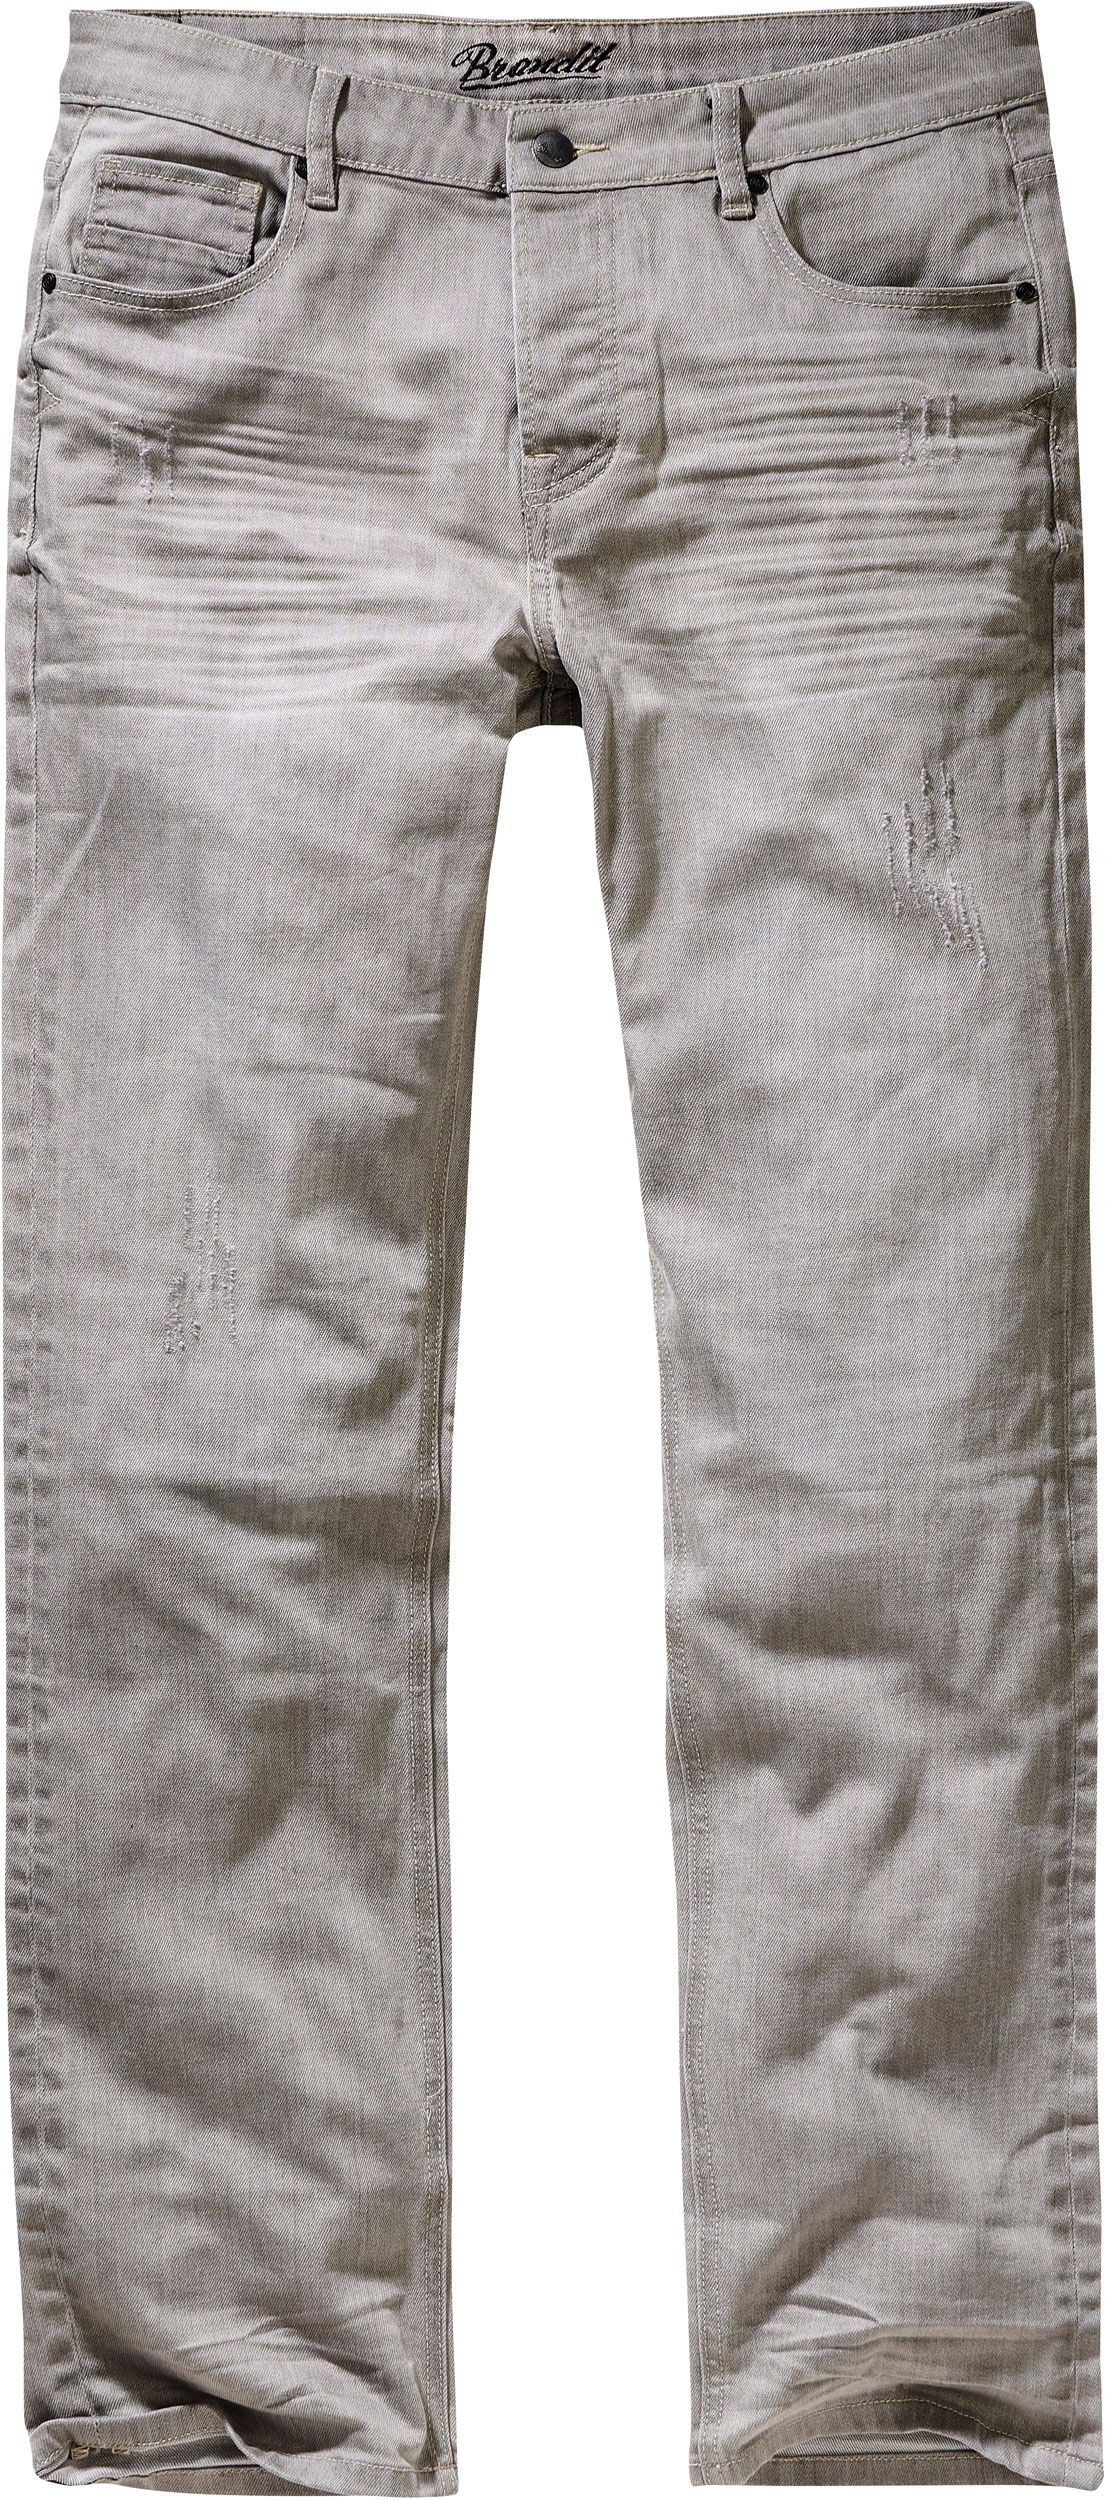 Brandit Jake Denim, Jeans - Gris - 38/34